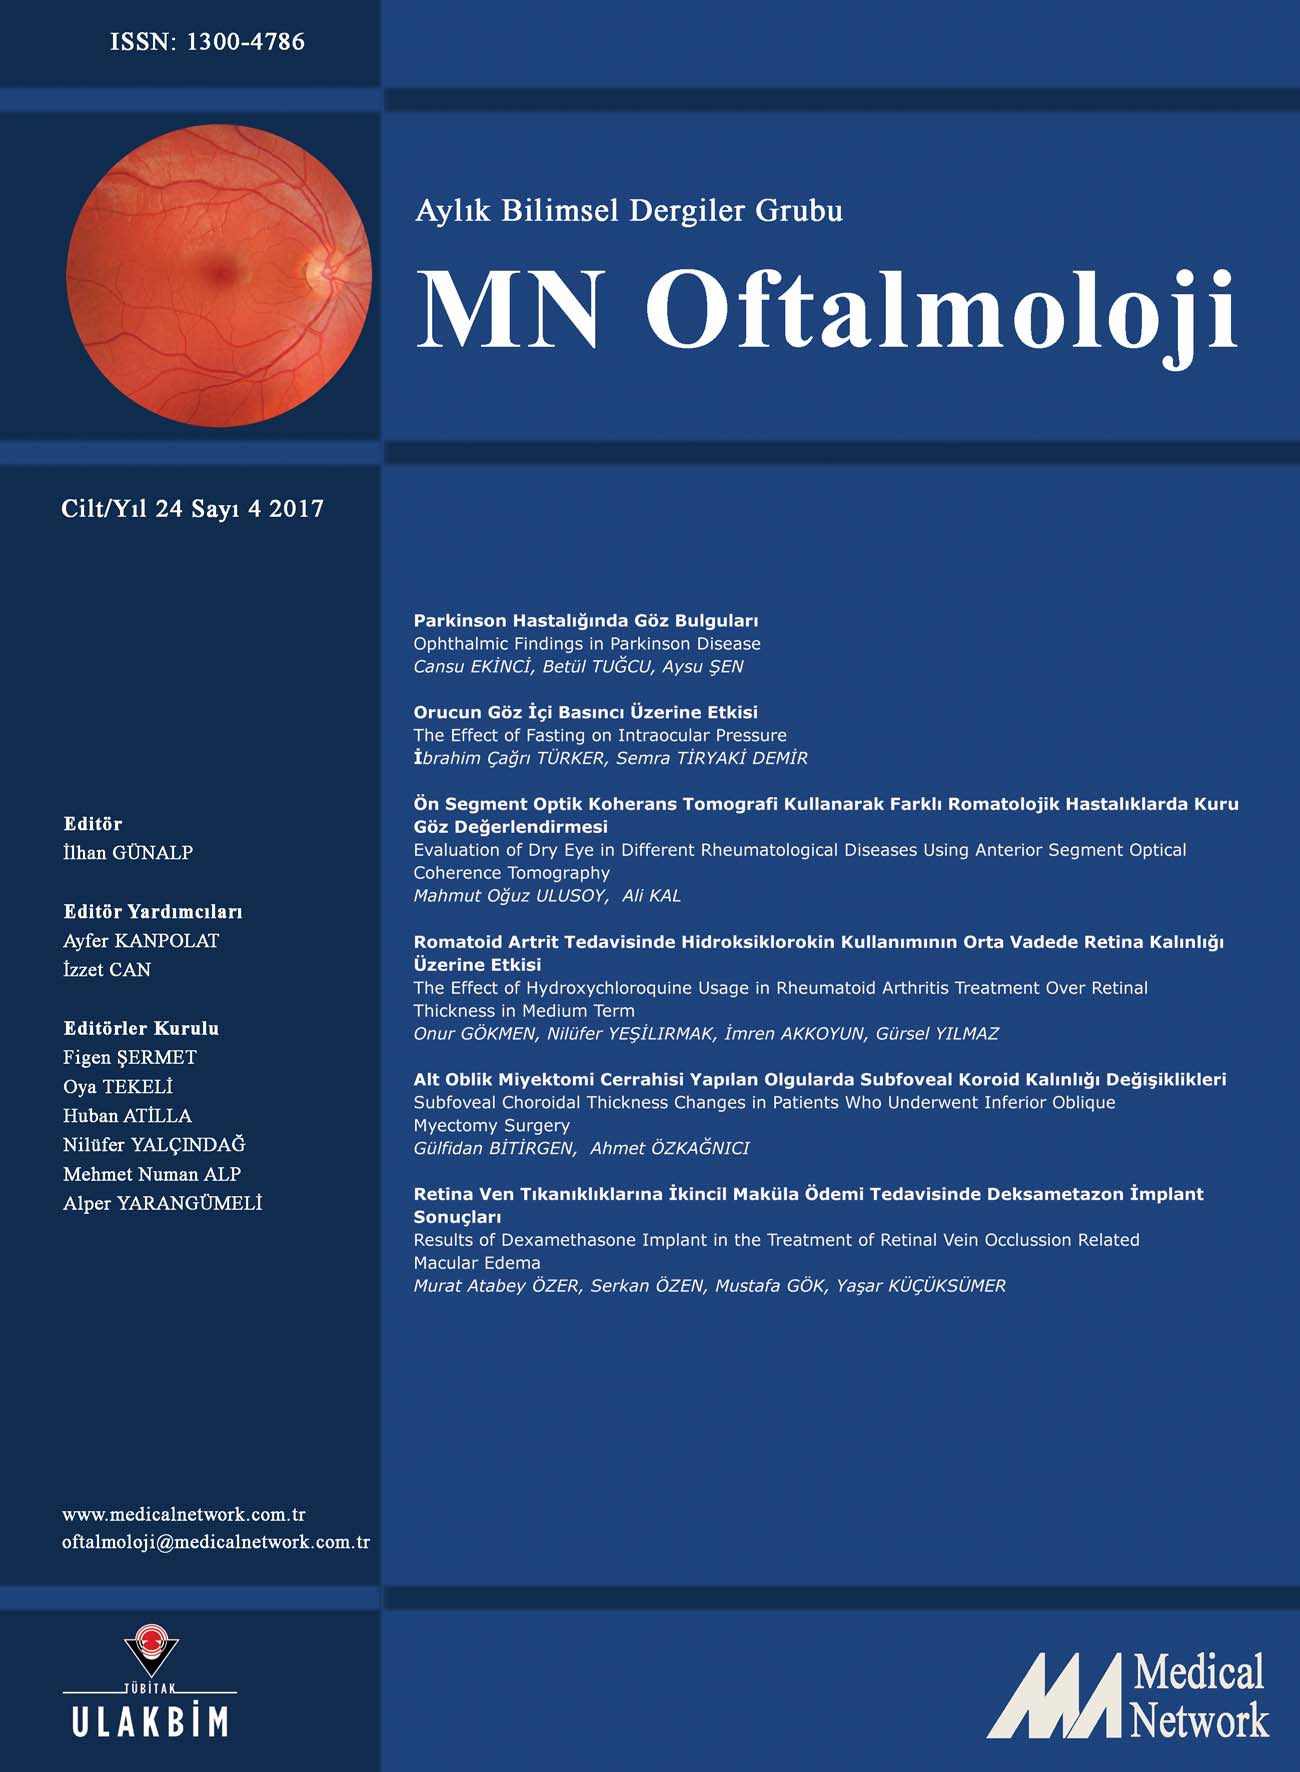 <p>MN Oftalmoloji Cilt: 24 Say: 4 2017 (MN Ophthalmology Volume: 24 No 4 2017)</p>